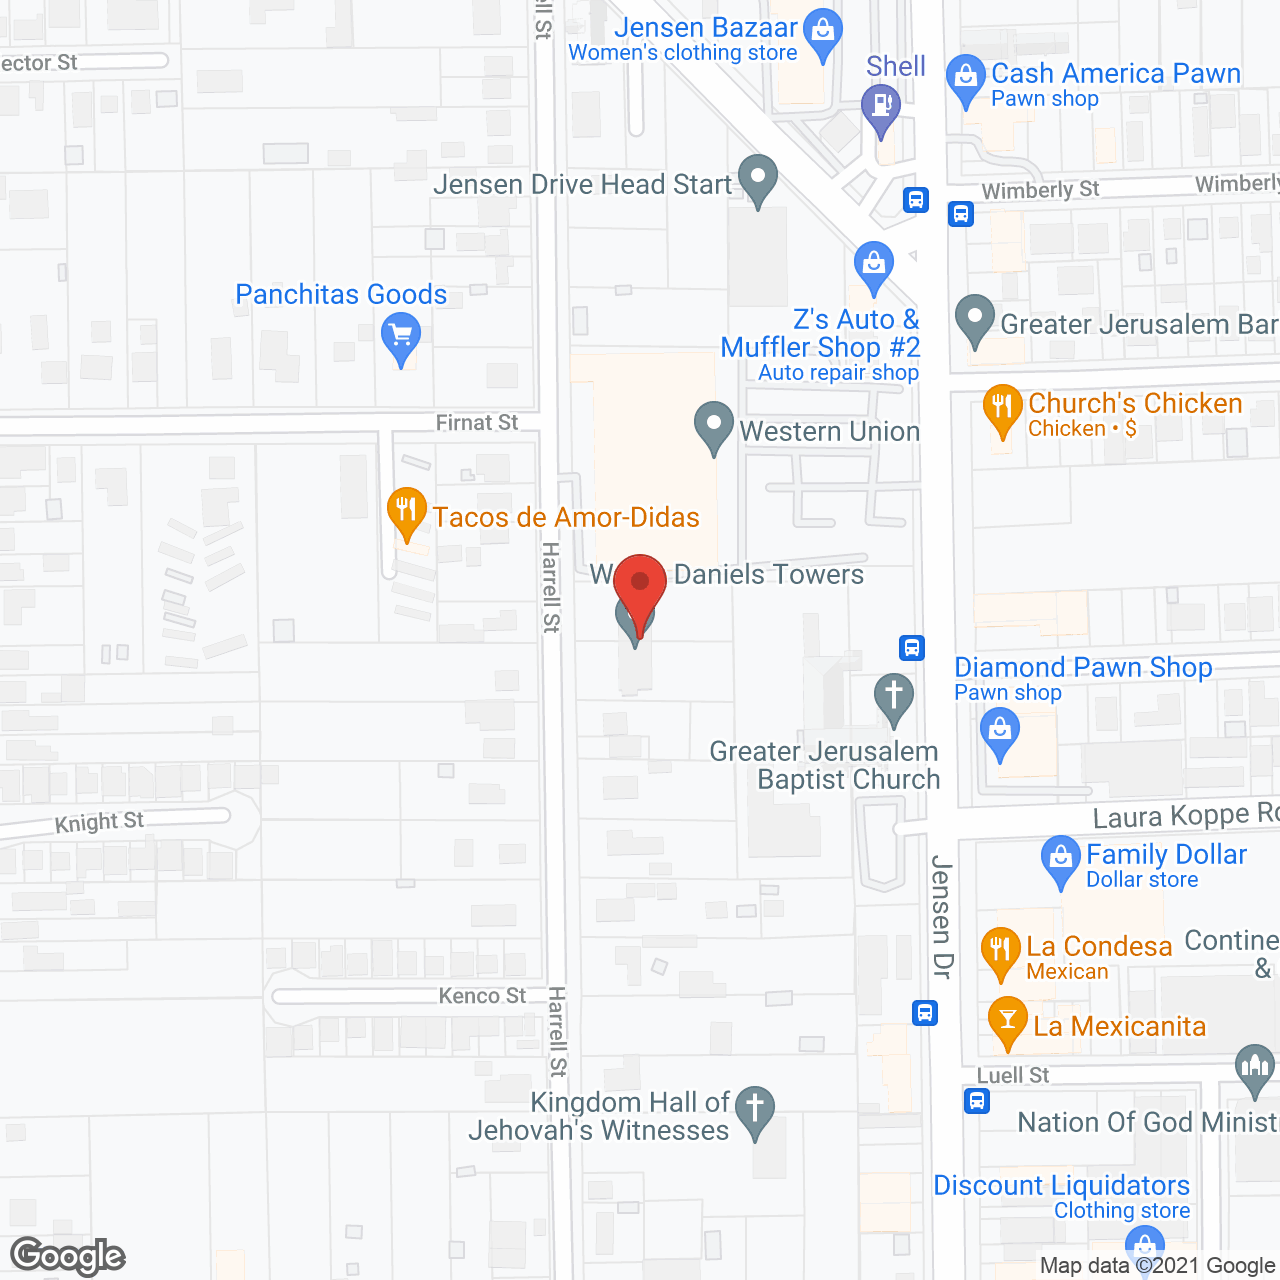 W Leo Daniels Towers in google map